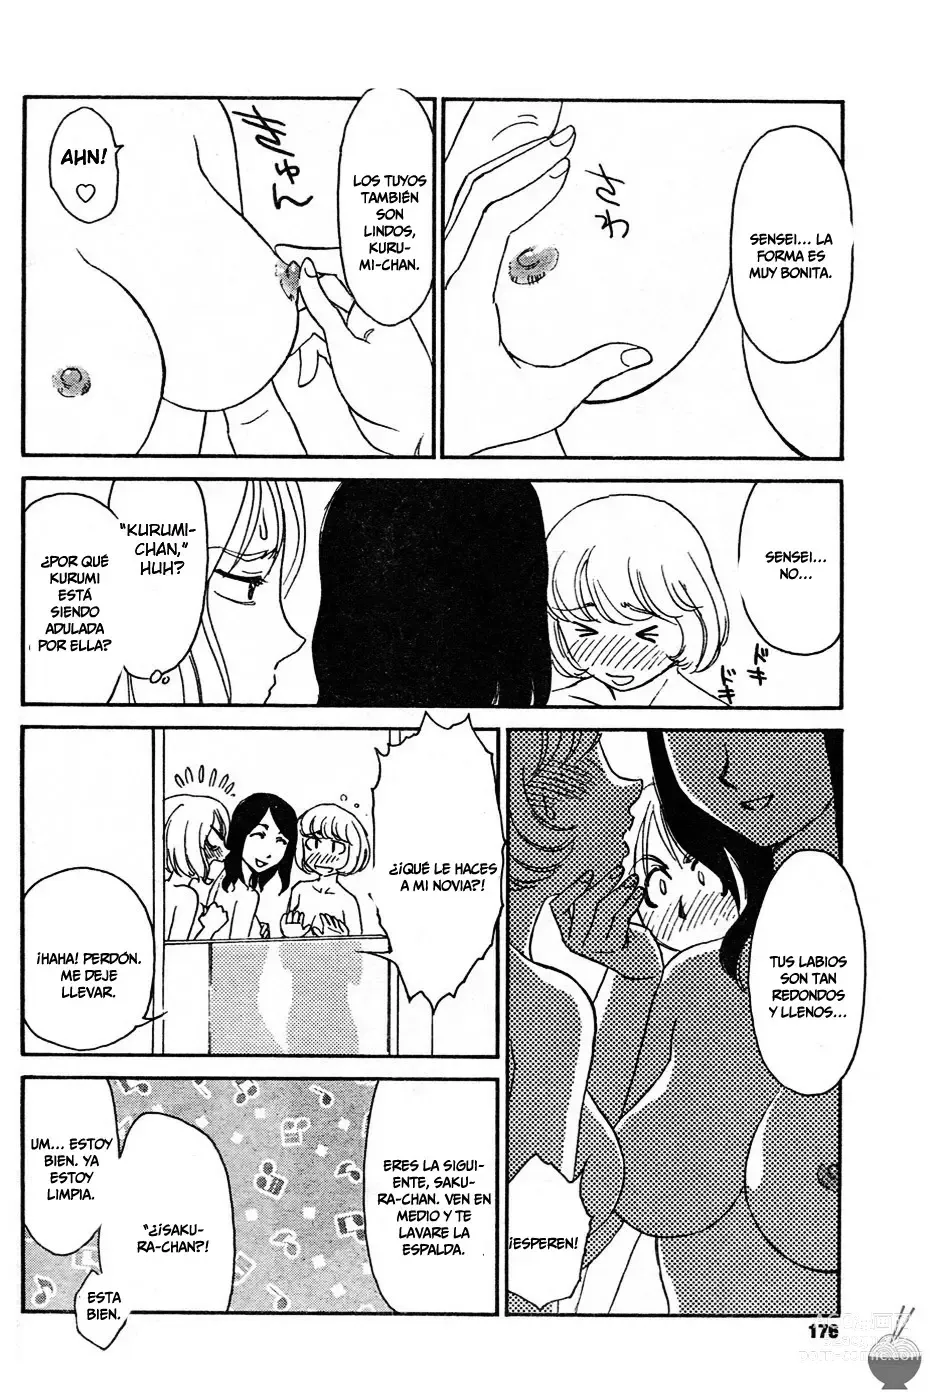 Page 230 of manga Hana no Iro - Colors of Flowers